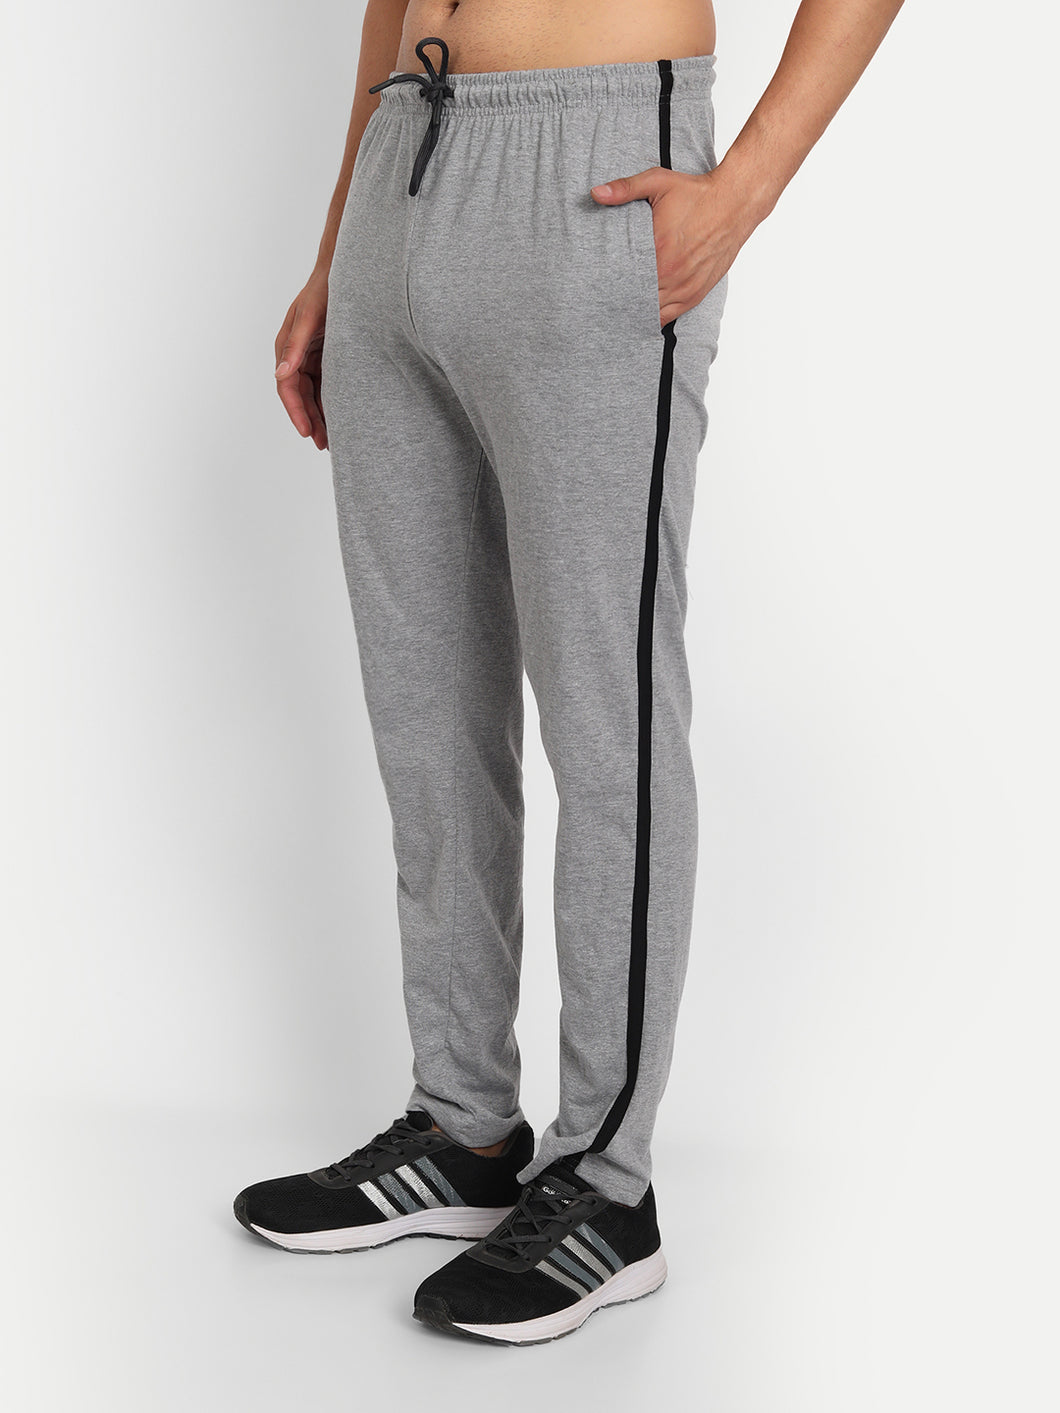 NWT Adidas Tricot JOGGER Pant Mens Training Track Pants 3 Stripe Grey Gray  Black | eBay